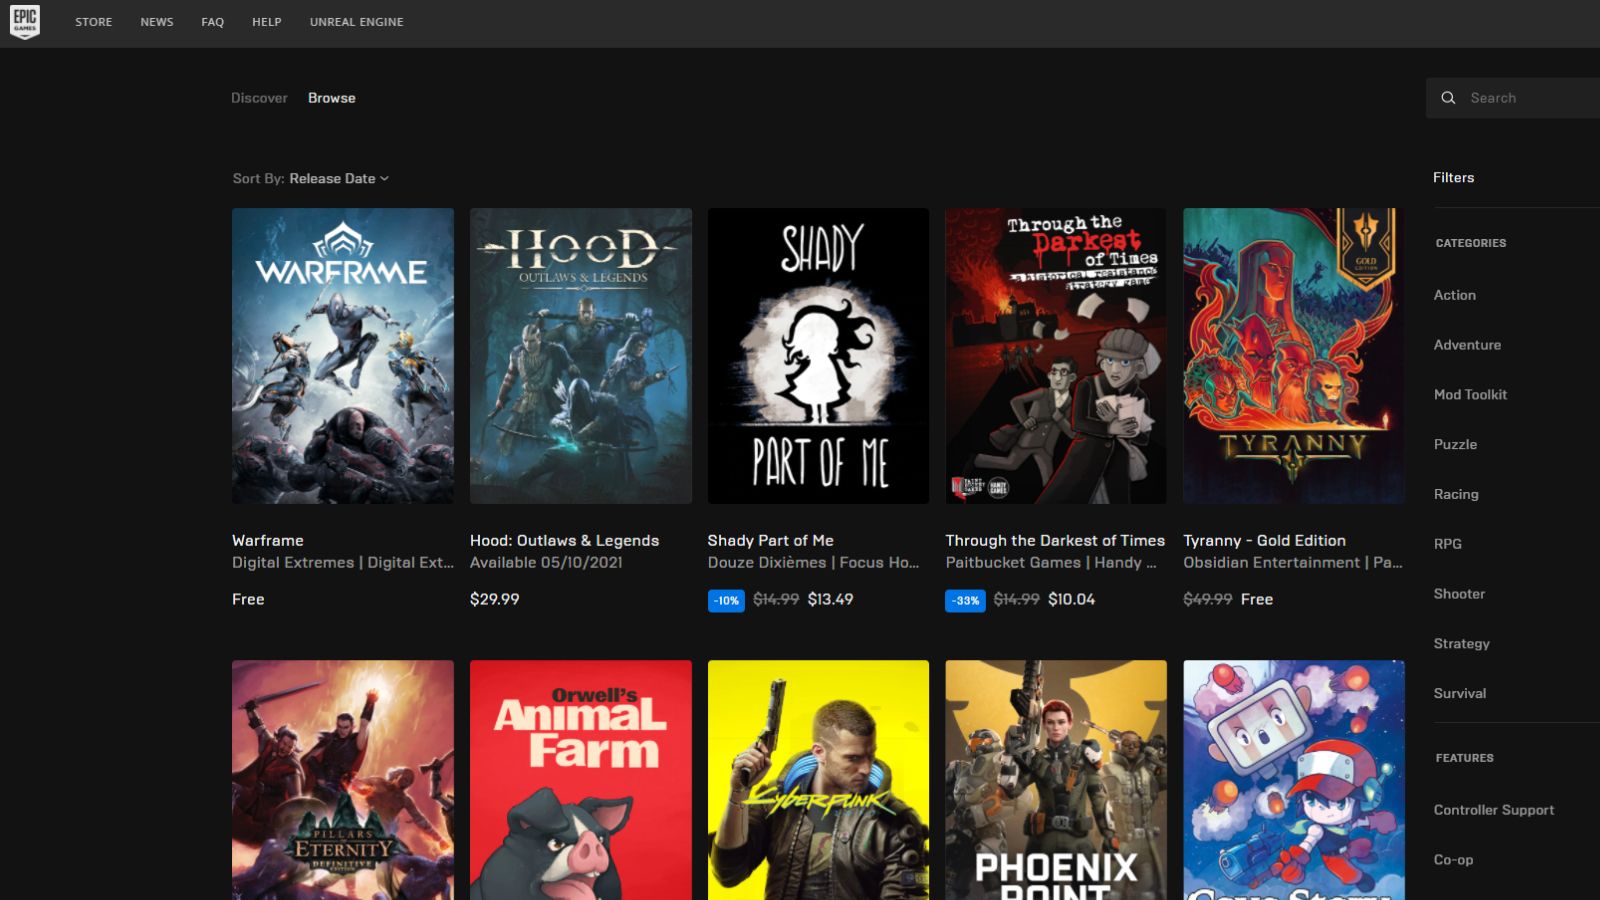 Screenshot of Epic Games Store browsing page.